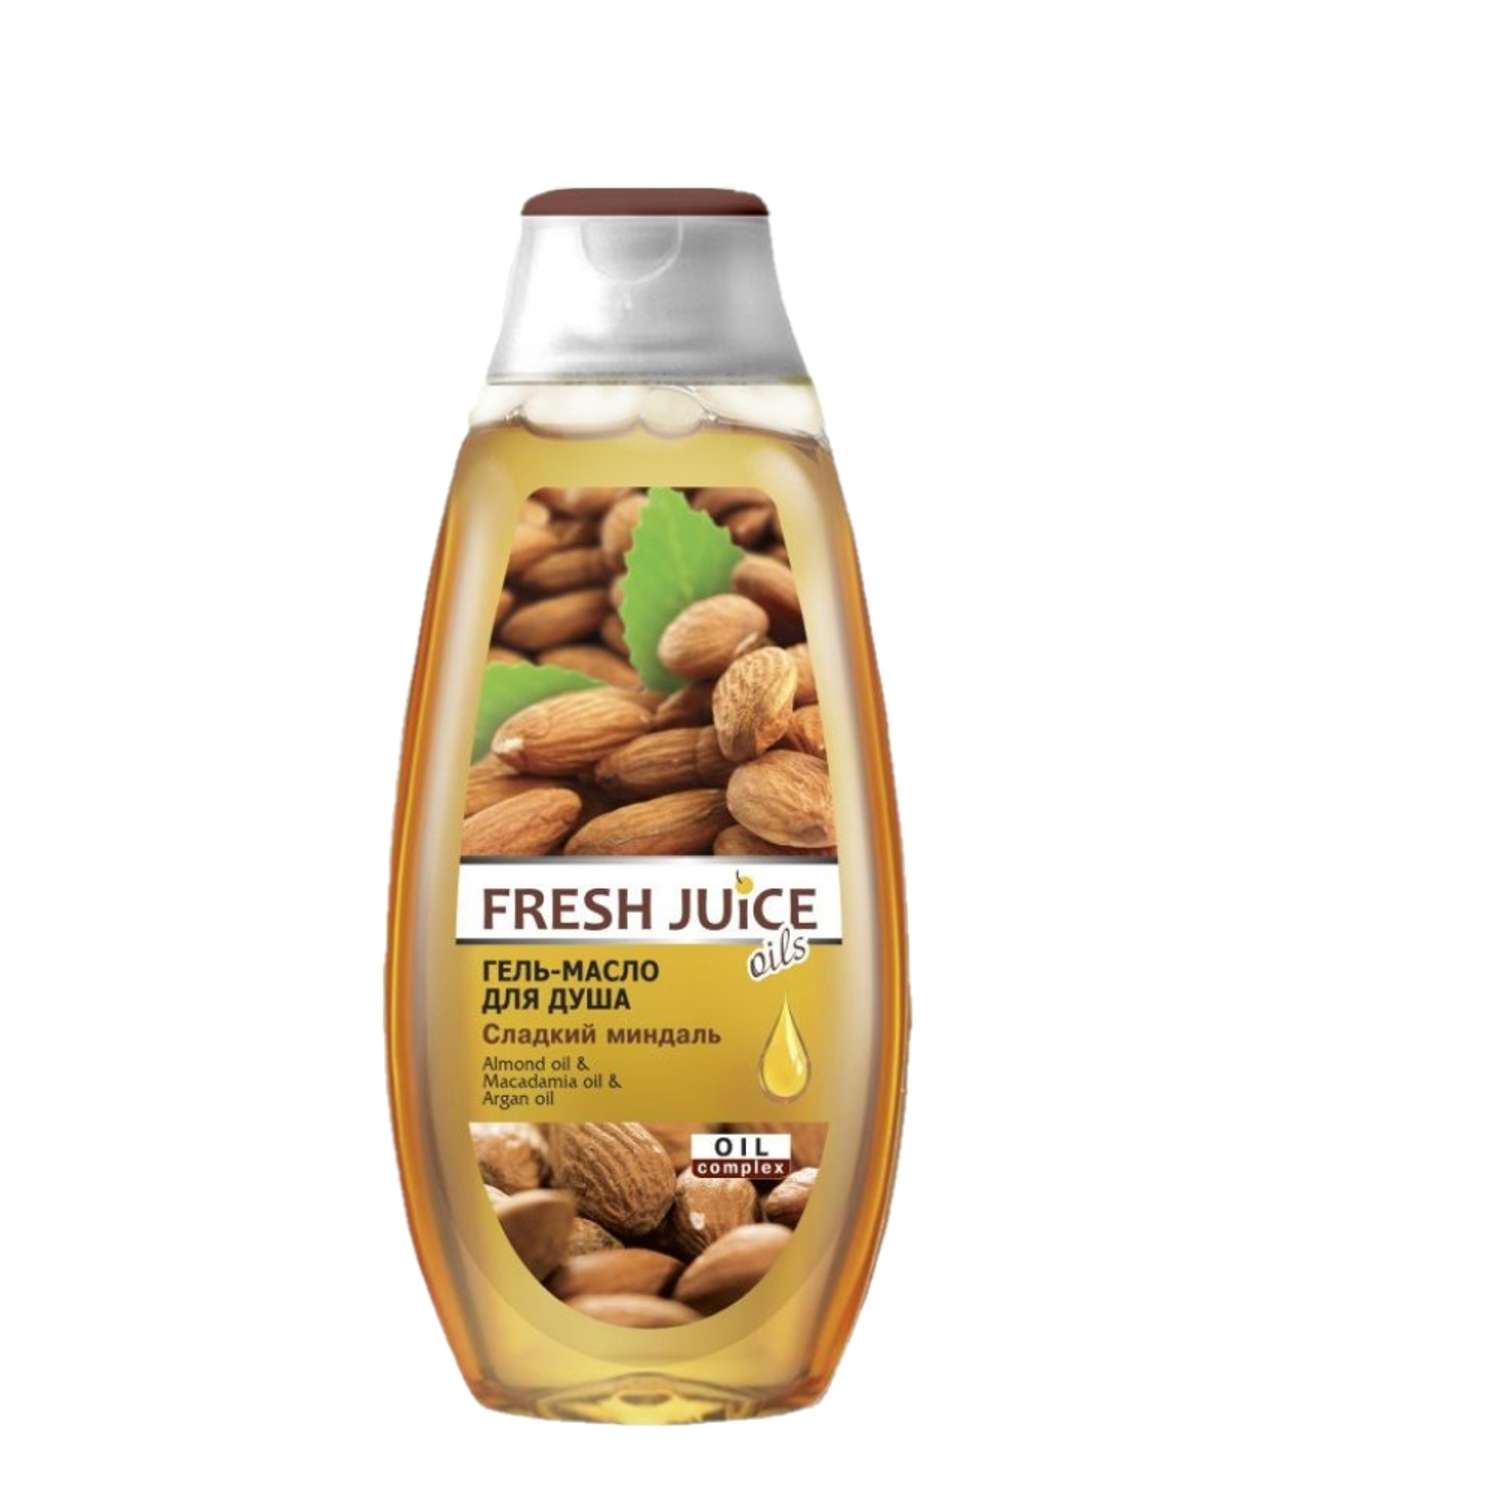 Fresh Juice гель-масло для душа Sweet Almond 400мл. Fresh Juice крем-гель для душа Sweet Almond 400 мл. Фреш Джус гель для душа 400мл. "Fresh Juice"гель для душа "Lemongrass & Vanilla", 750 мл. Миндальный гель для душа